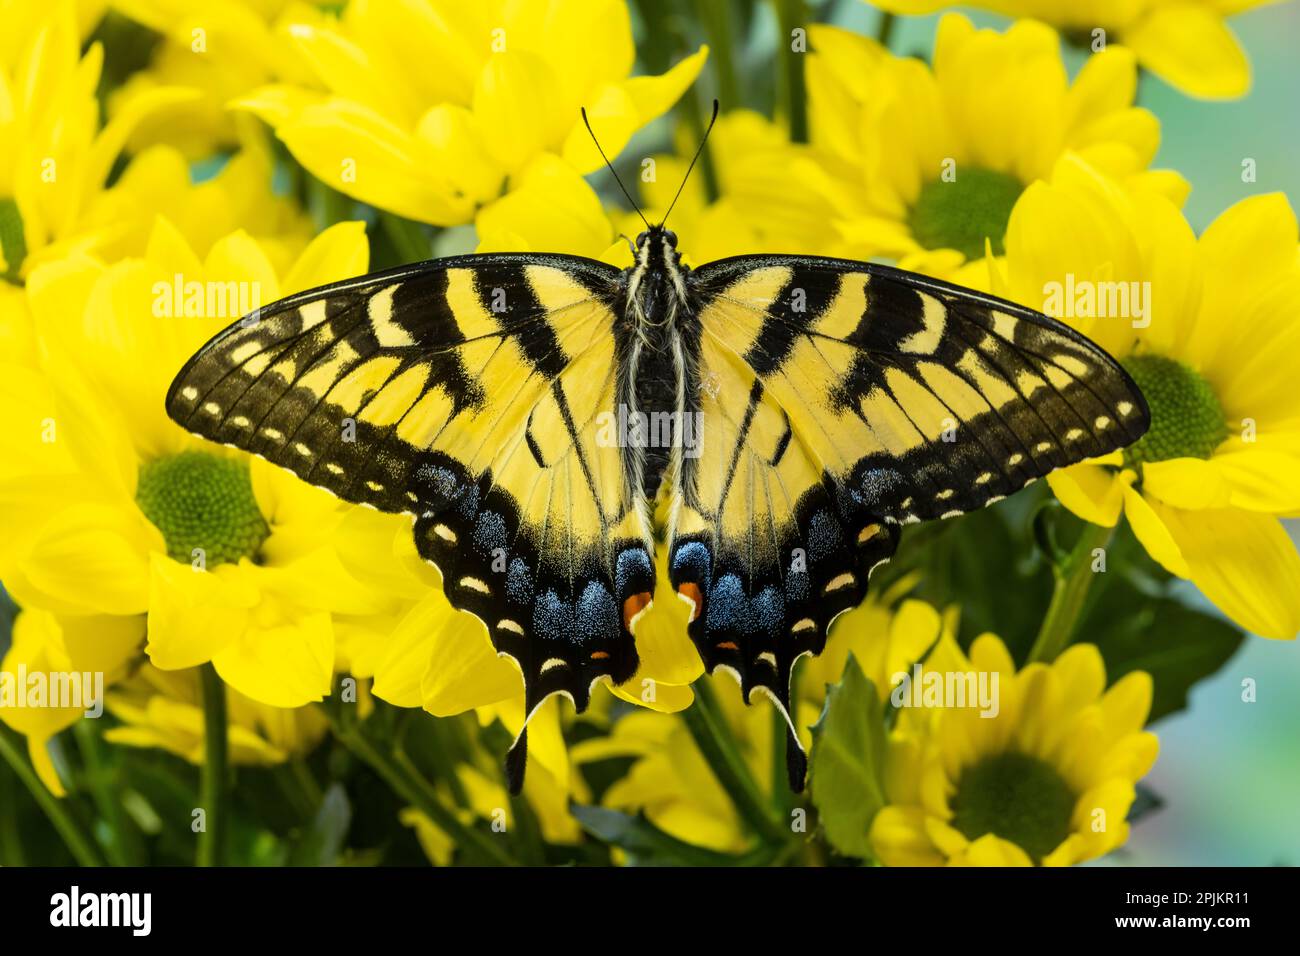 USA, Washington State, Sammamish. Eastern tiger swallowtail butterfly Stock Photo